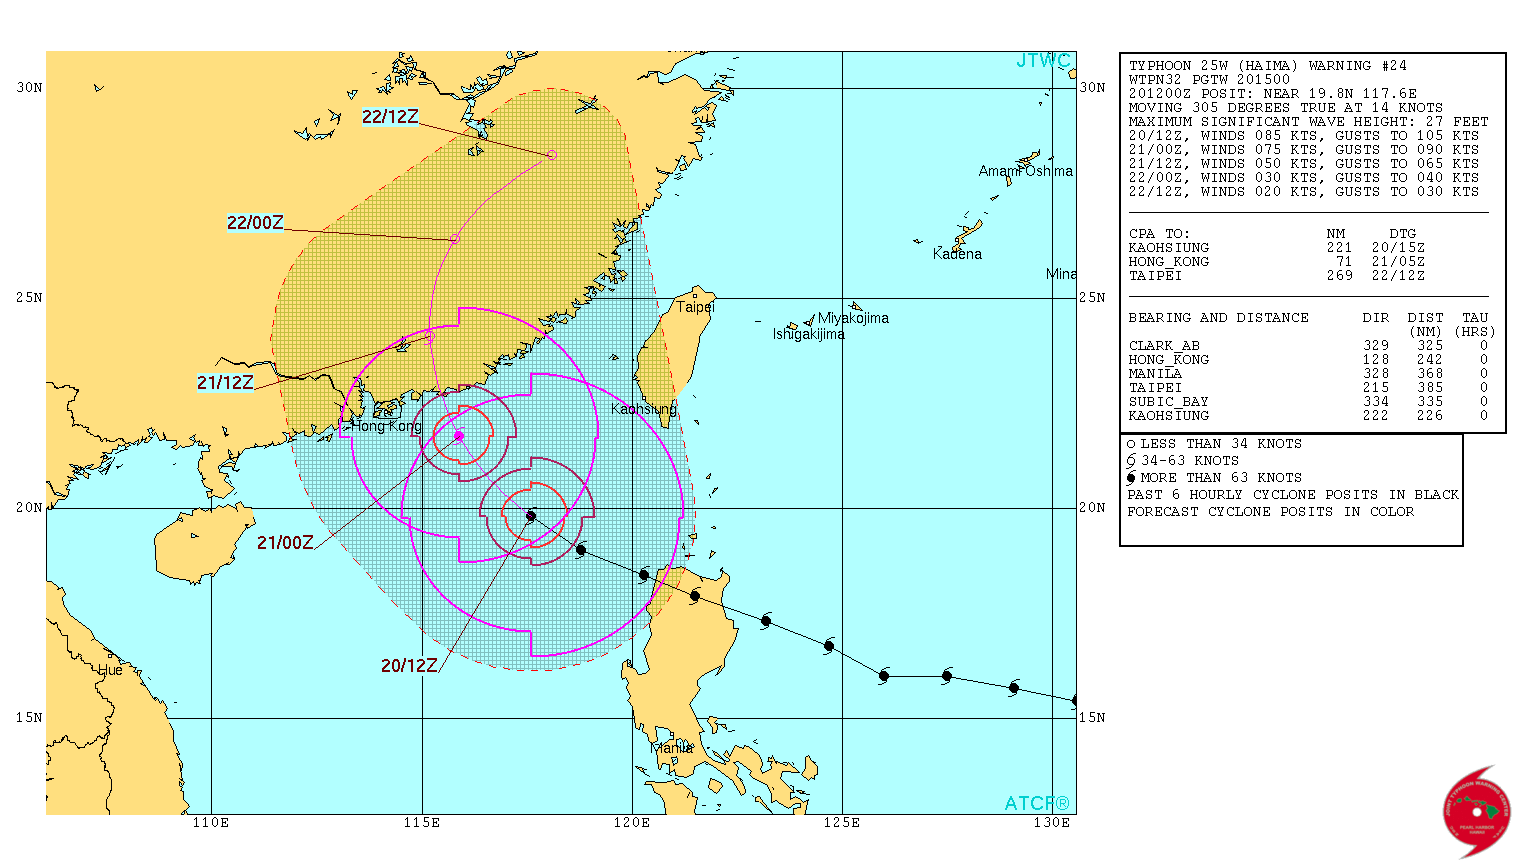 Typhoon Haima forecast track by JTWC at 15:00 UTC on October 20, 2016